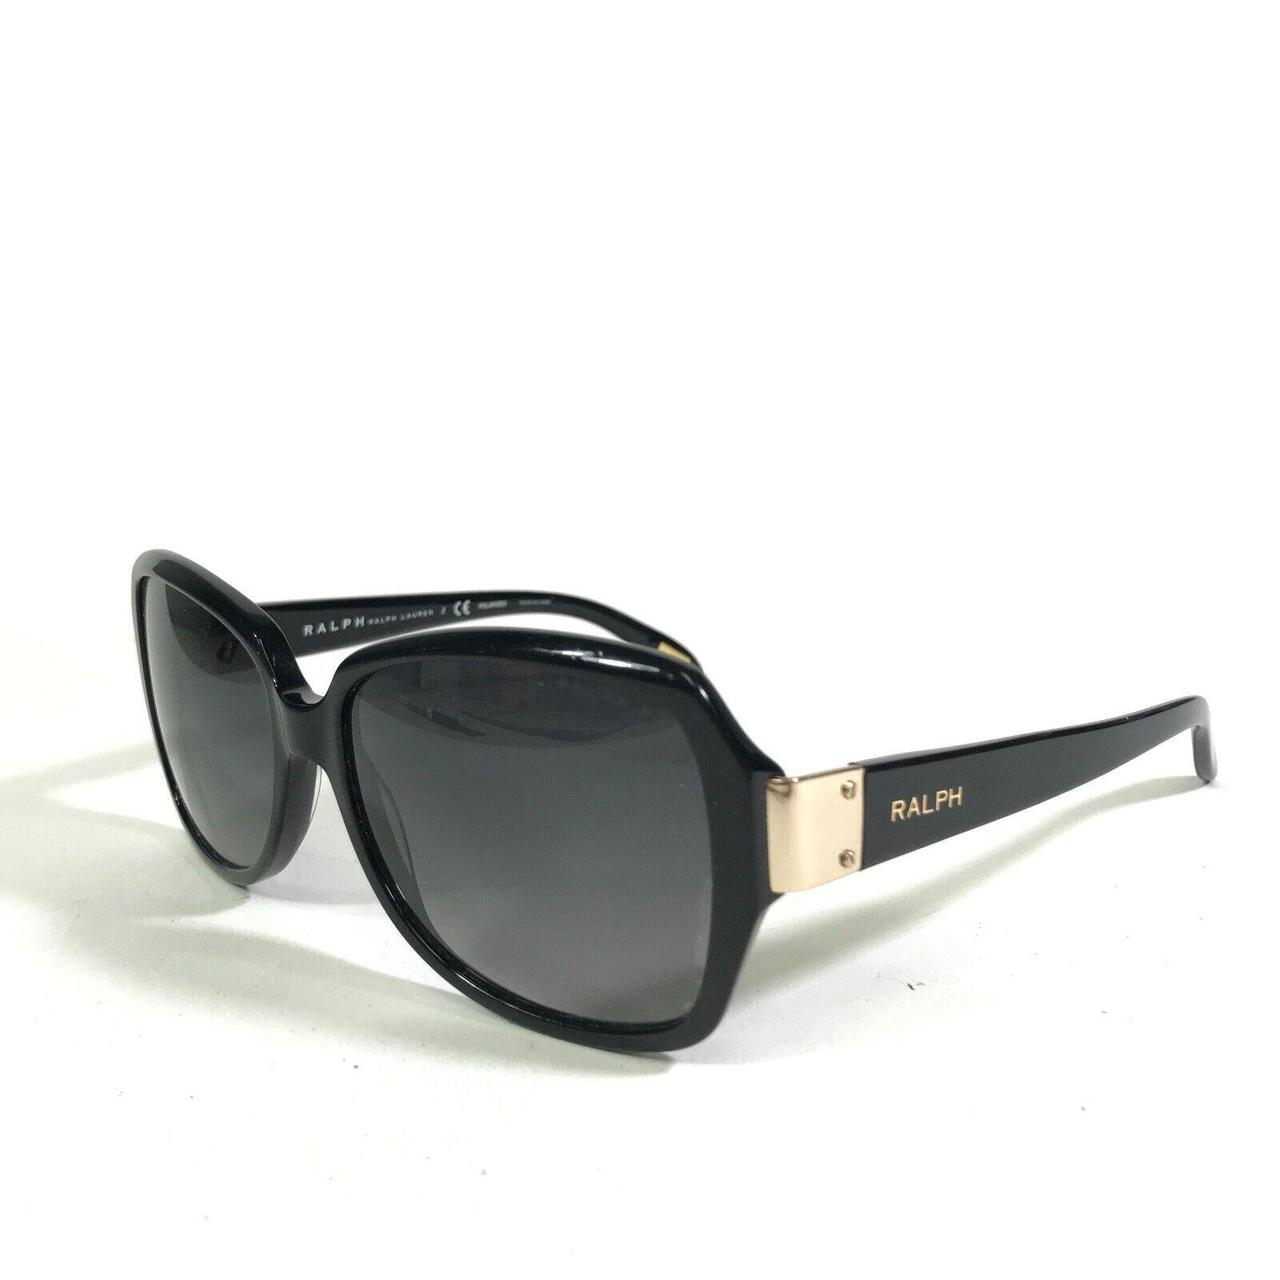 Ralph Lauren Women's Black and Blue Sunglasses